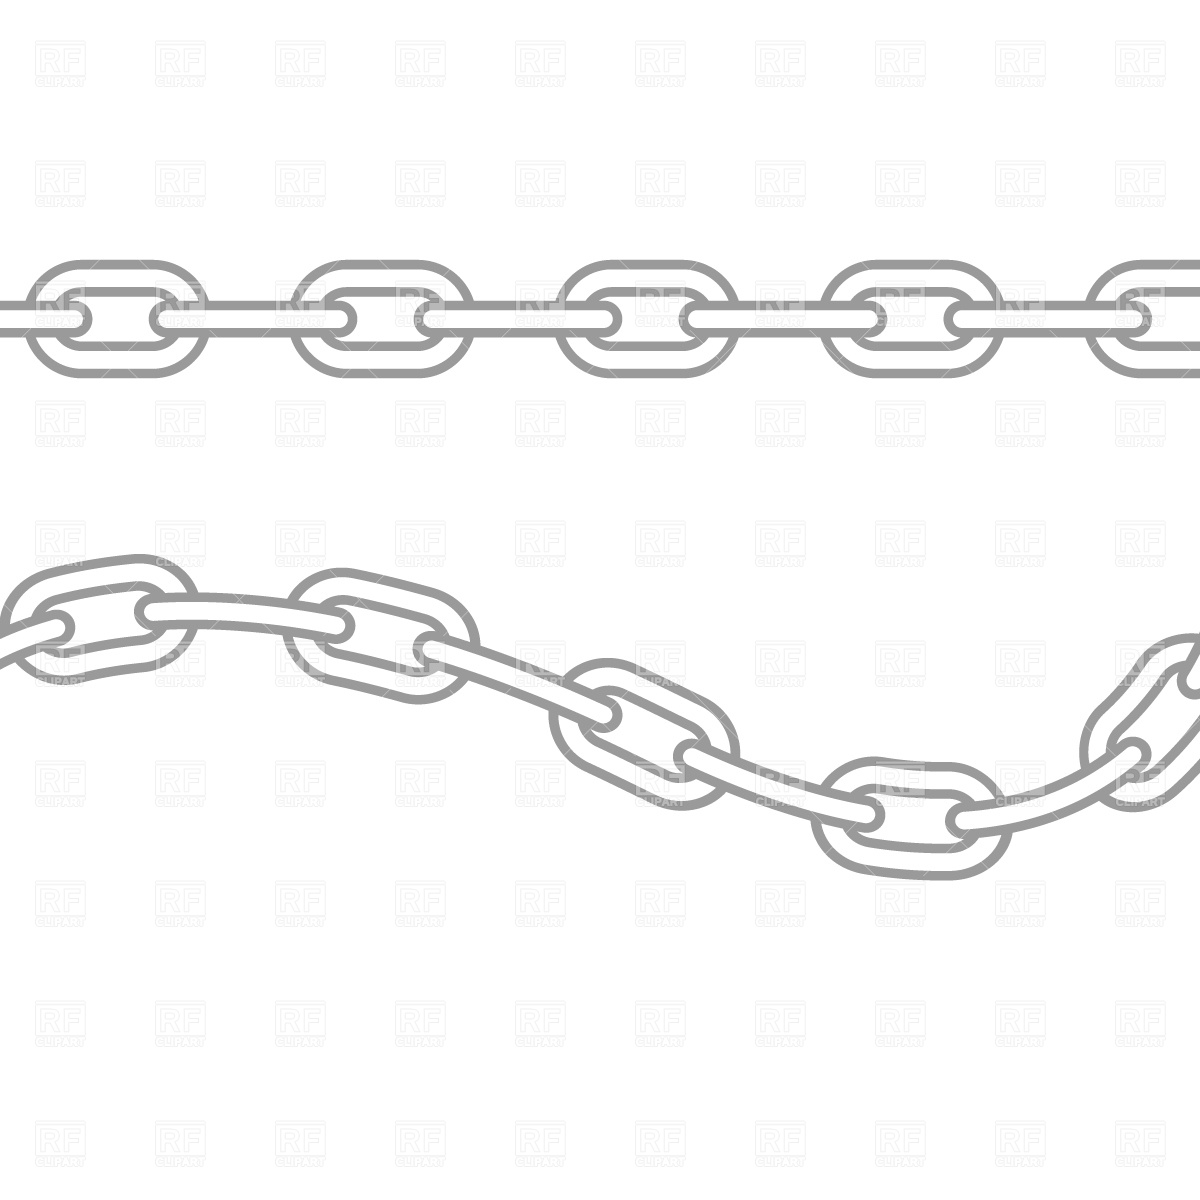 Chain Link Borders Vector Art